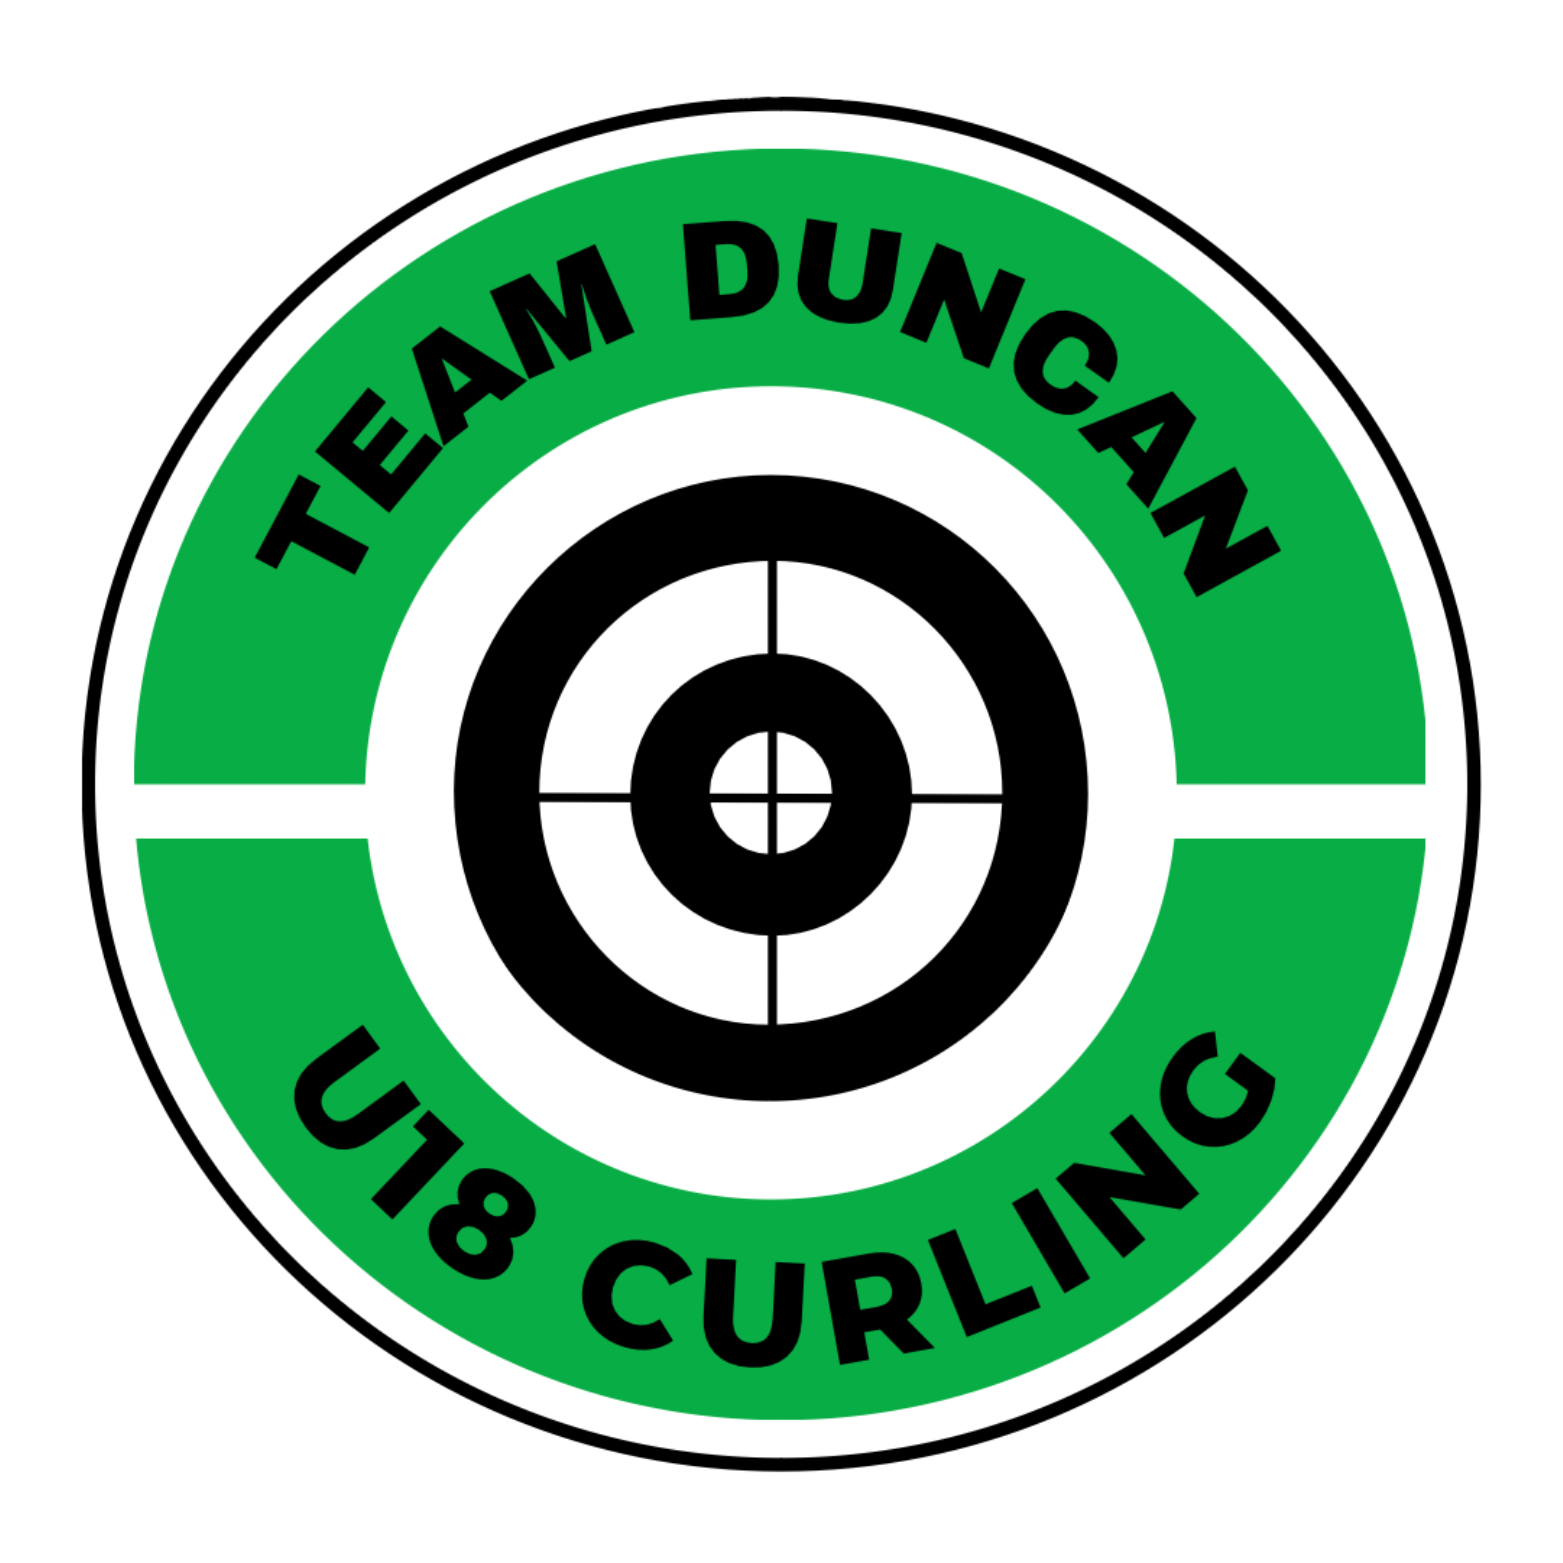 Team Duncan